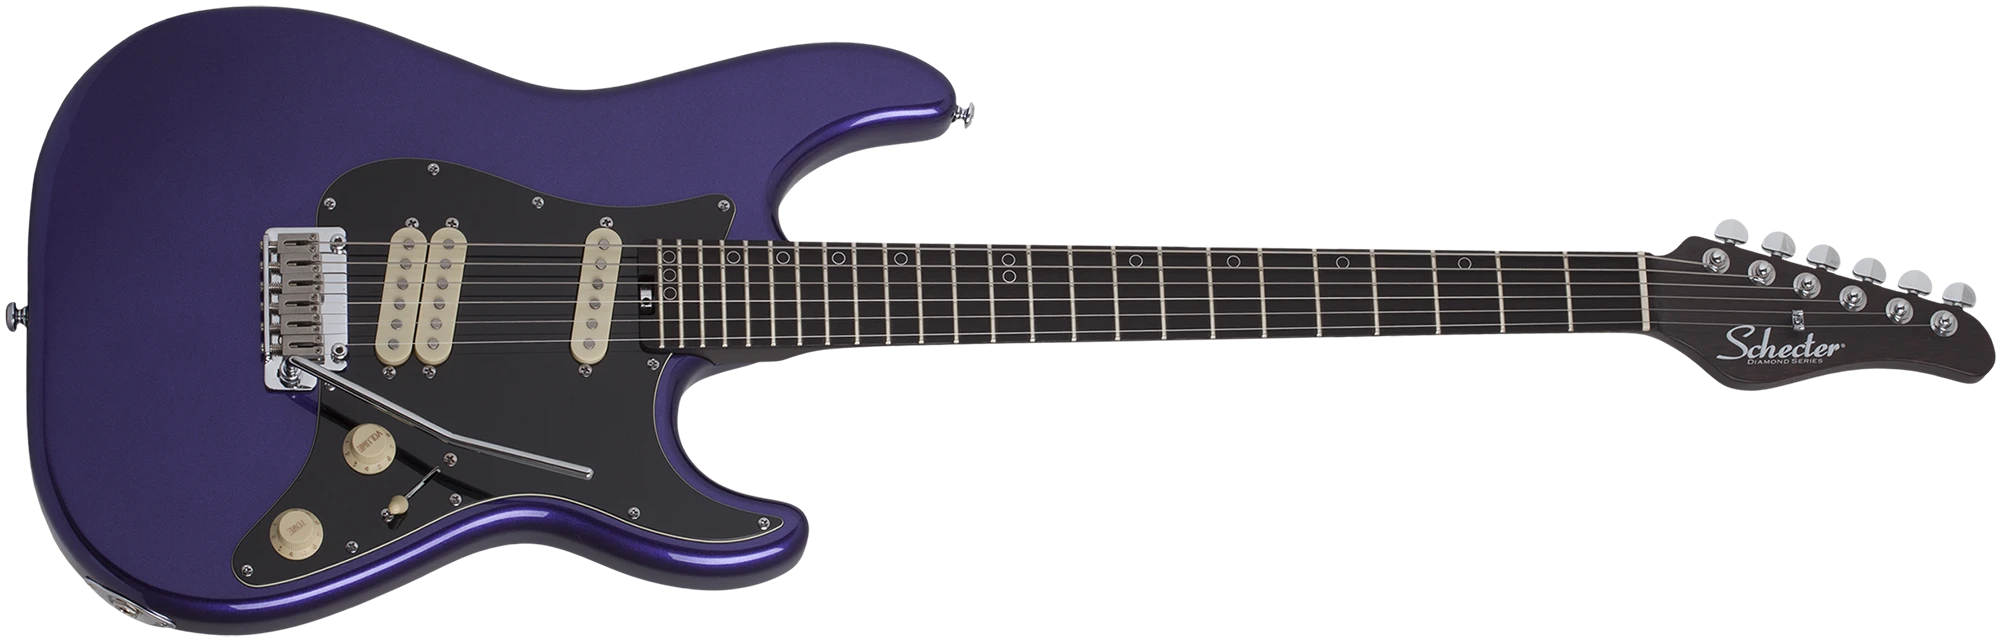 Schecter MV-6 metallic purple